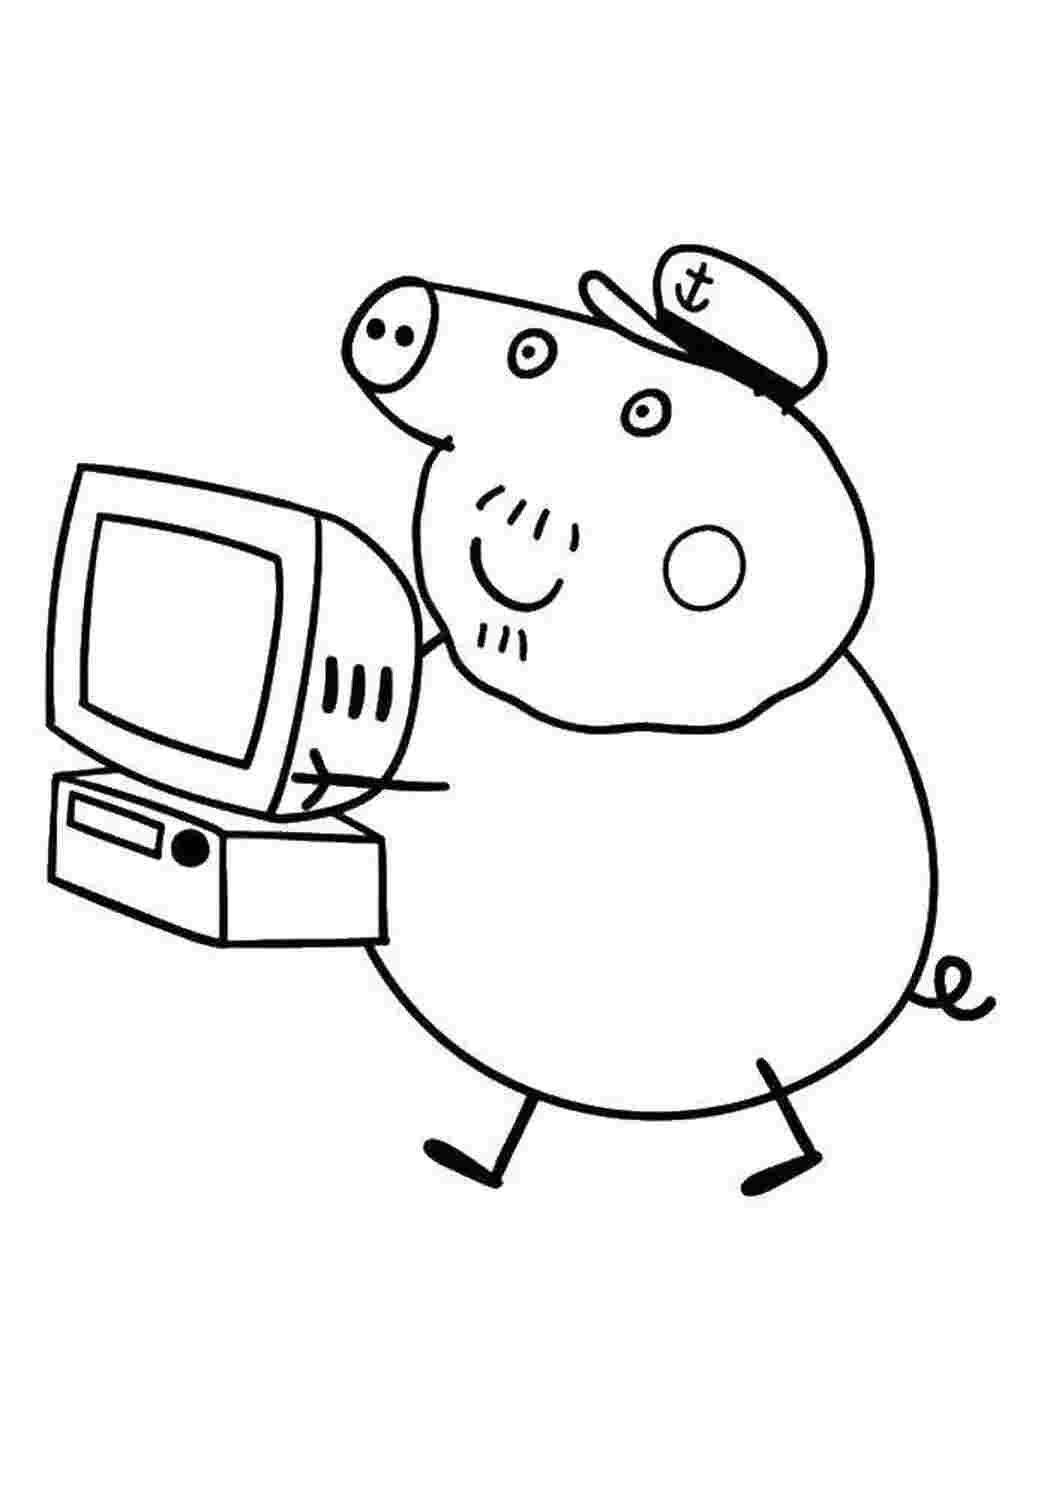 Раскраски Папа свин и компьютер Свинка Пеппа папа, свинья, компьютер